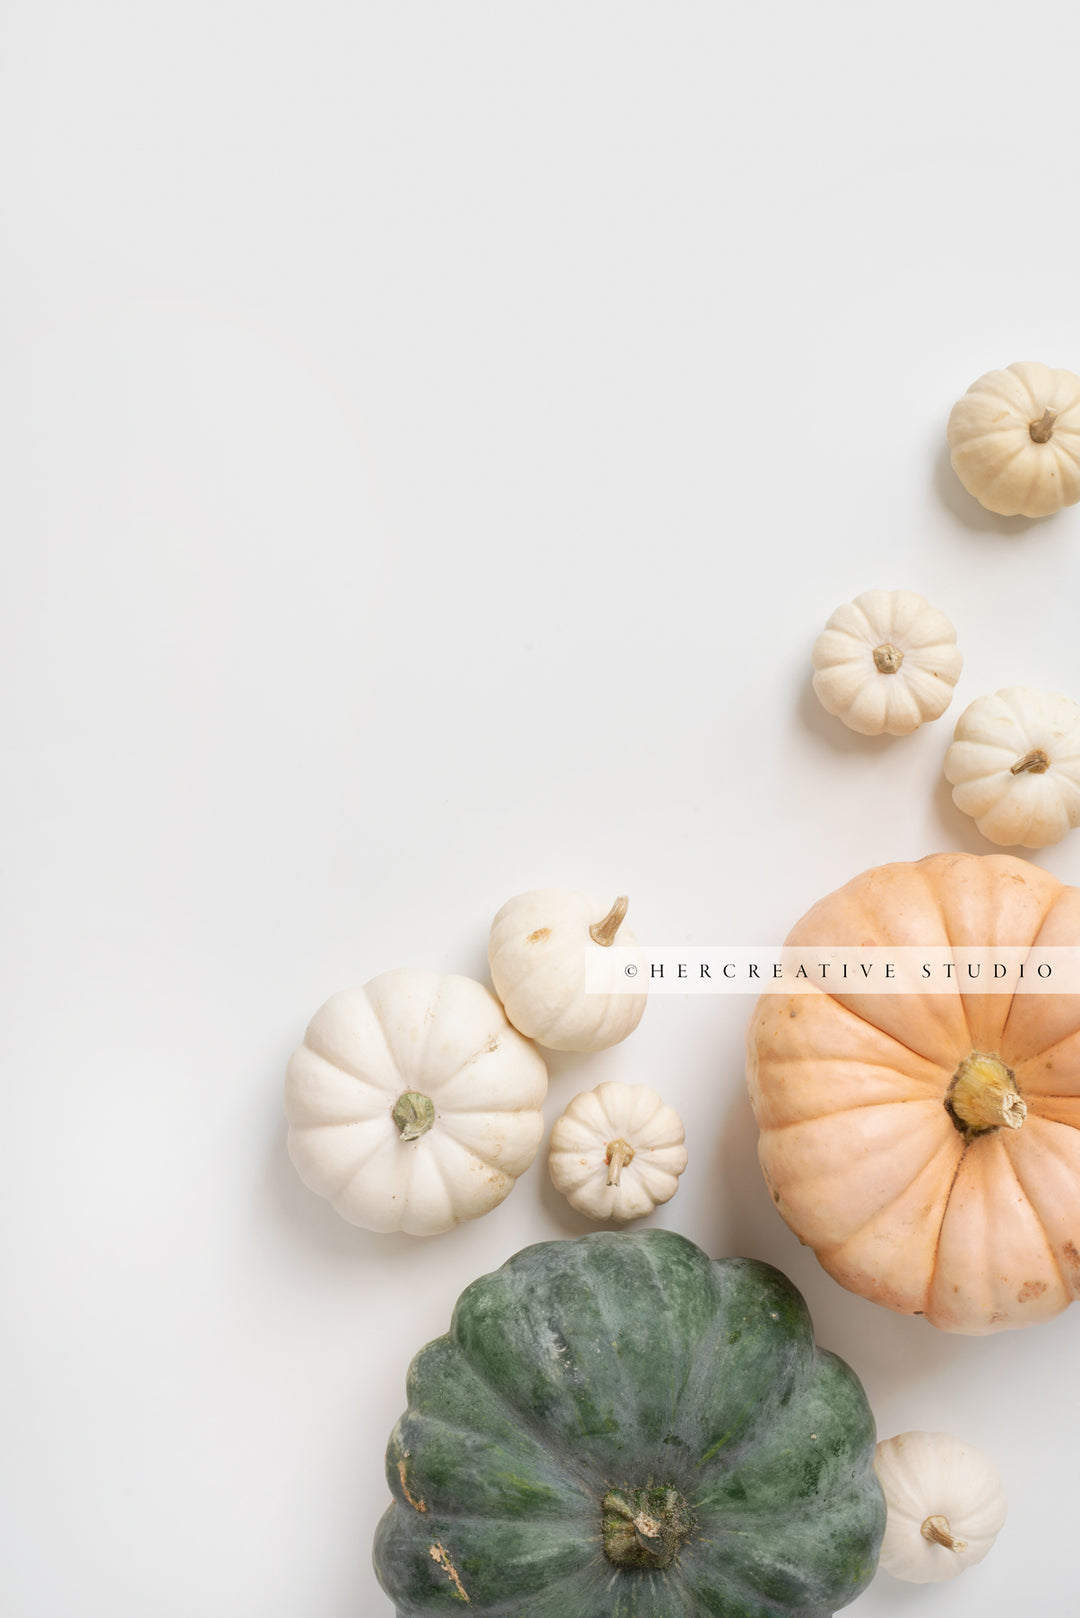 Pumpkins on White Background 5. Digital Stock Image.